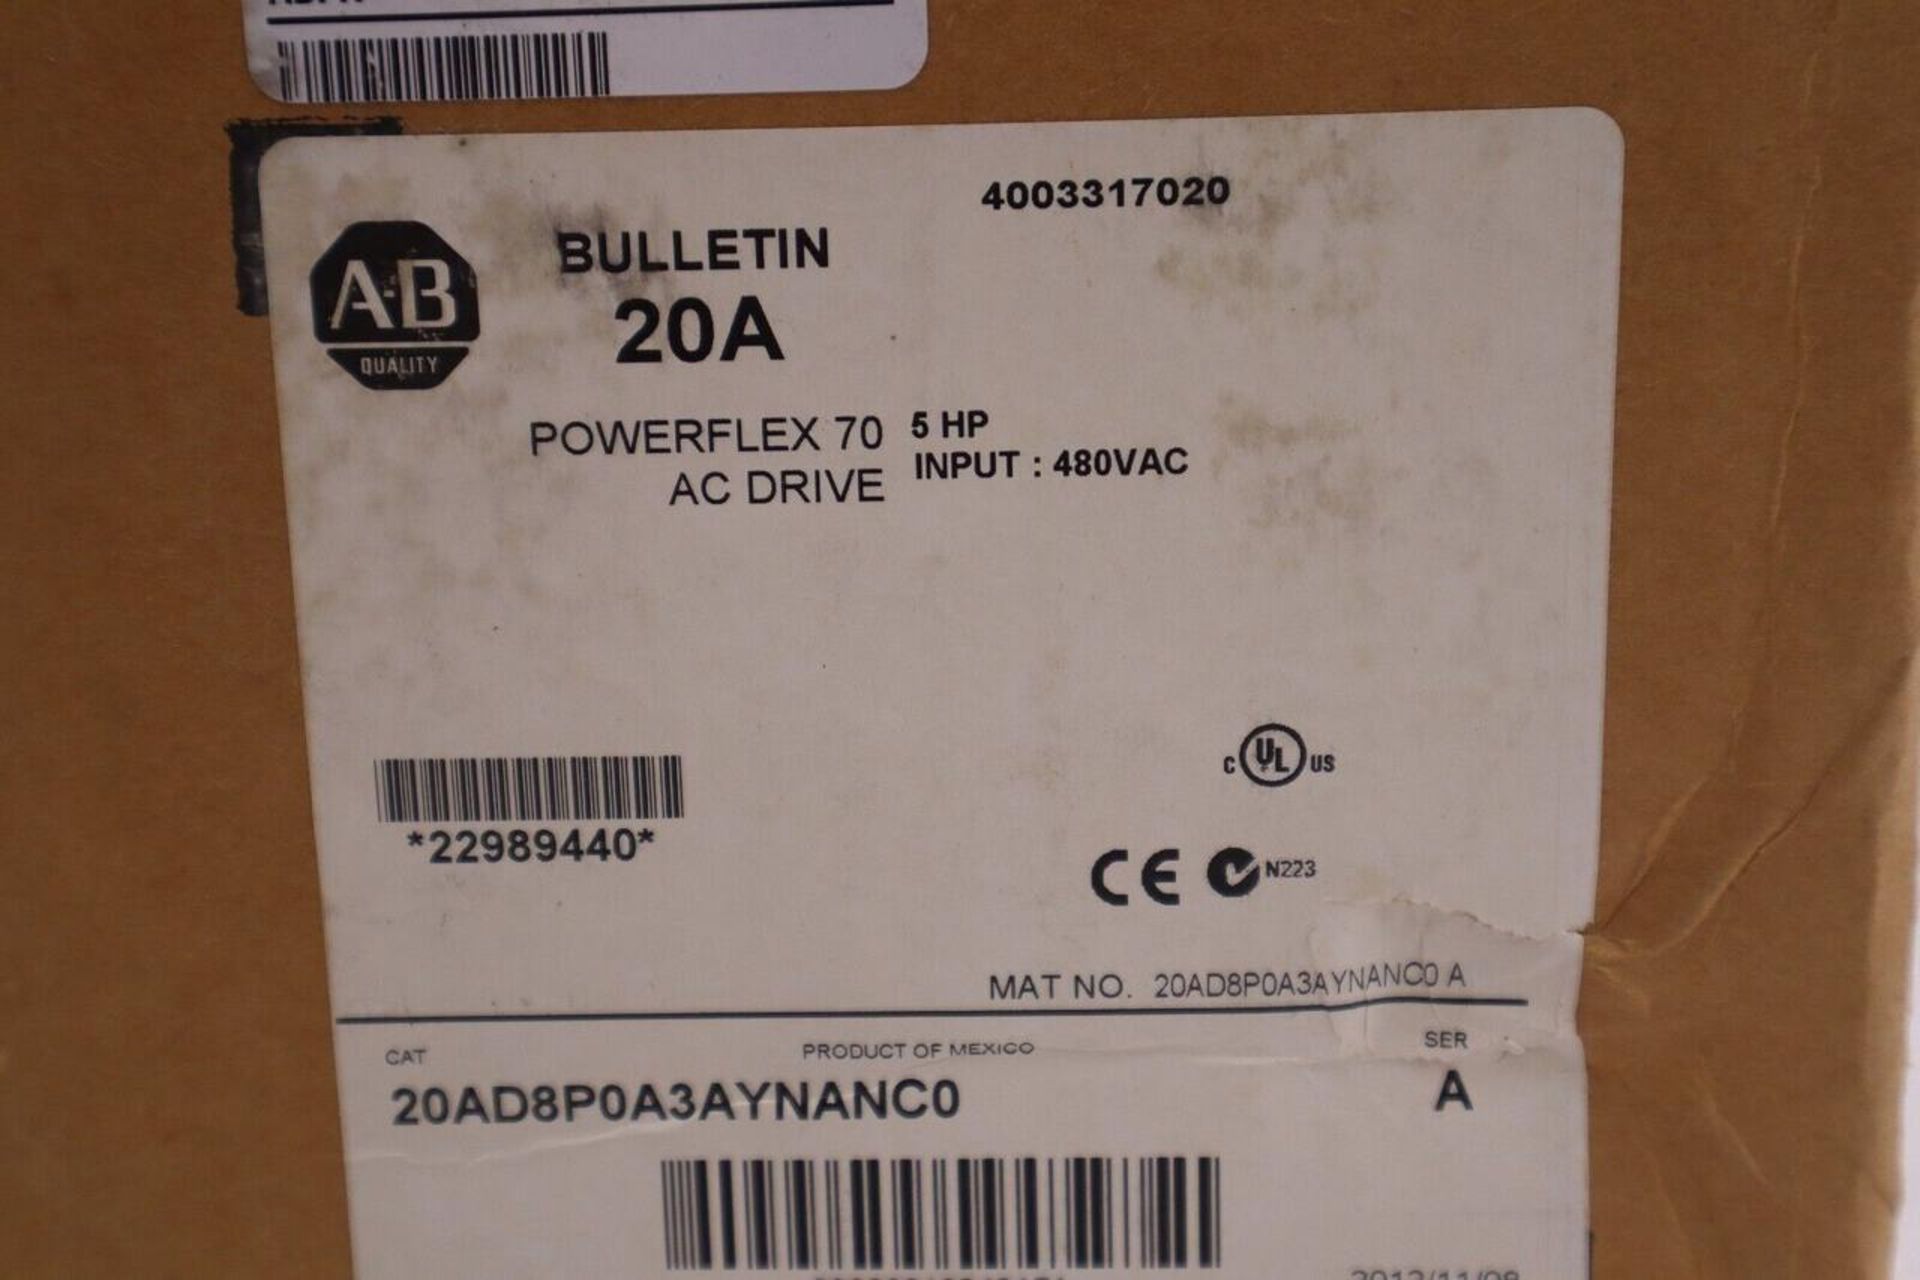 NEW Allen-Bradley 20AD8P0A3AYNANC0 SER A Powerflex AC Drive 5 HP - Image 2 of 2